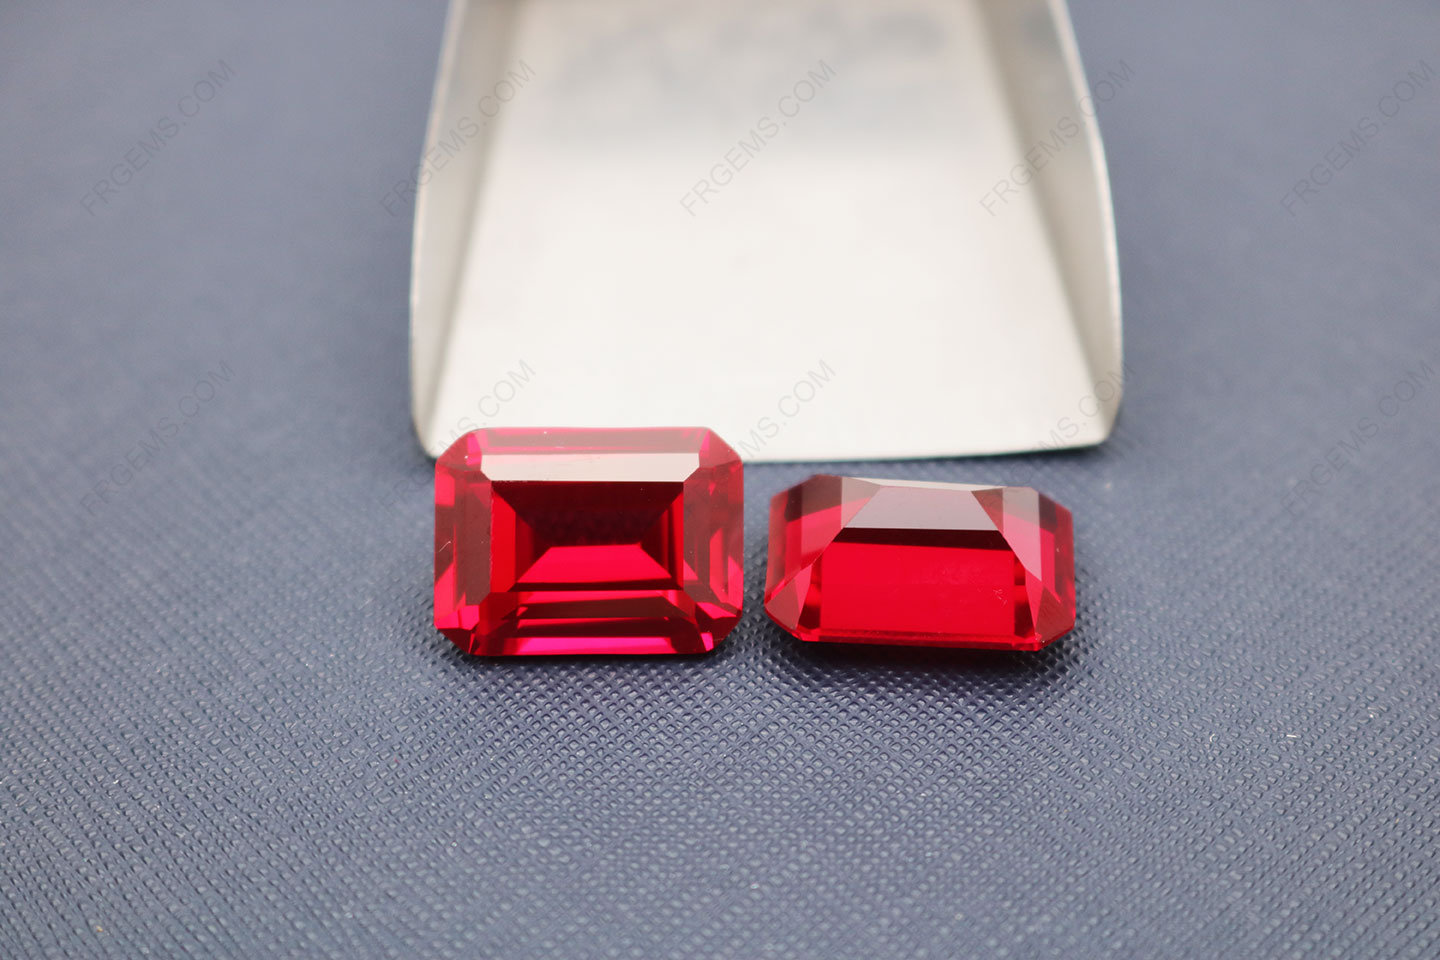 Corundum Synthetic Ruby Red #5 Emerald Cut 20x15mm Large size gemstones